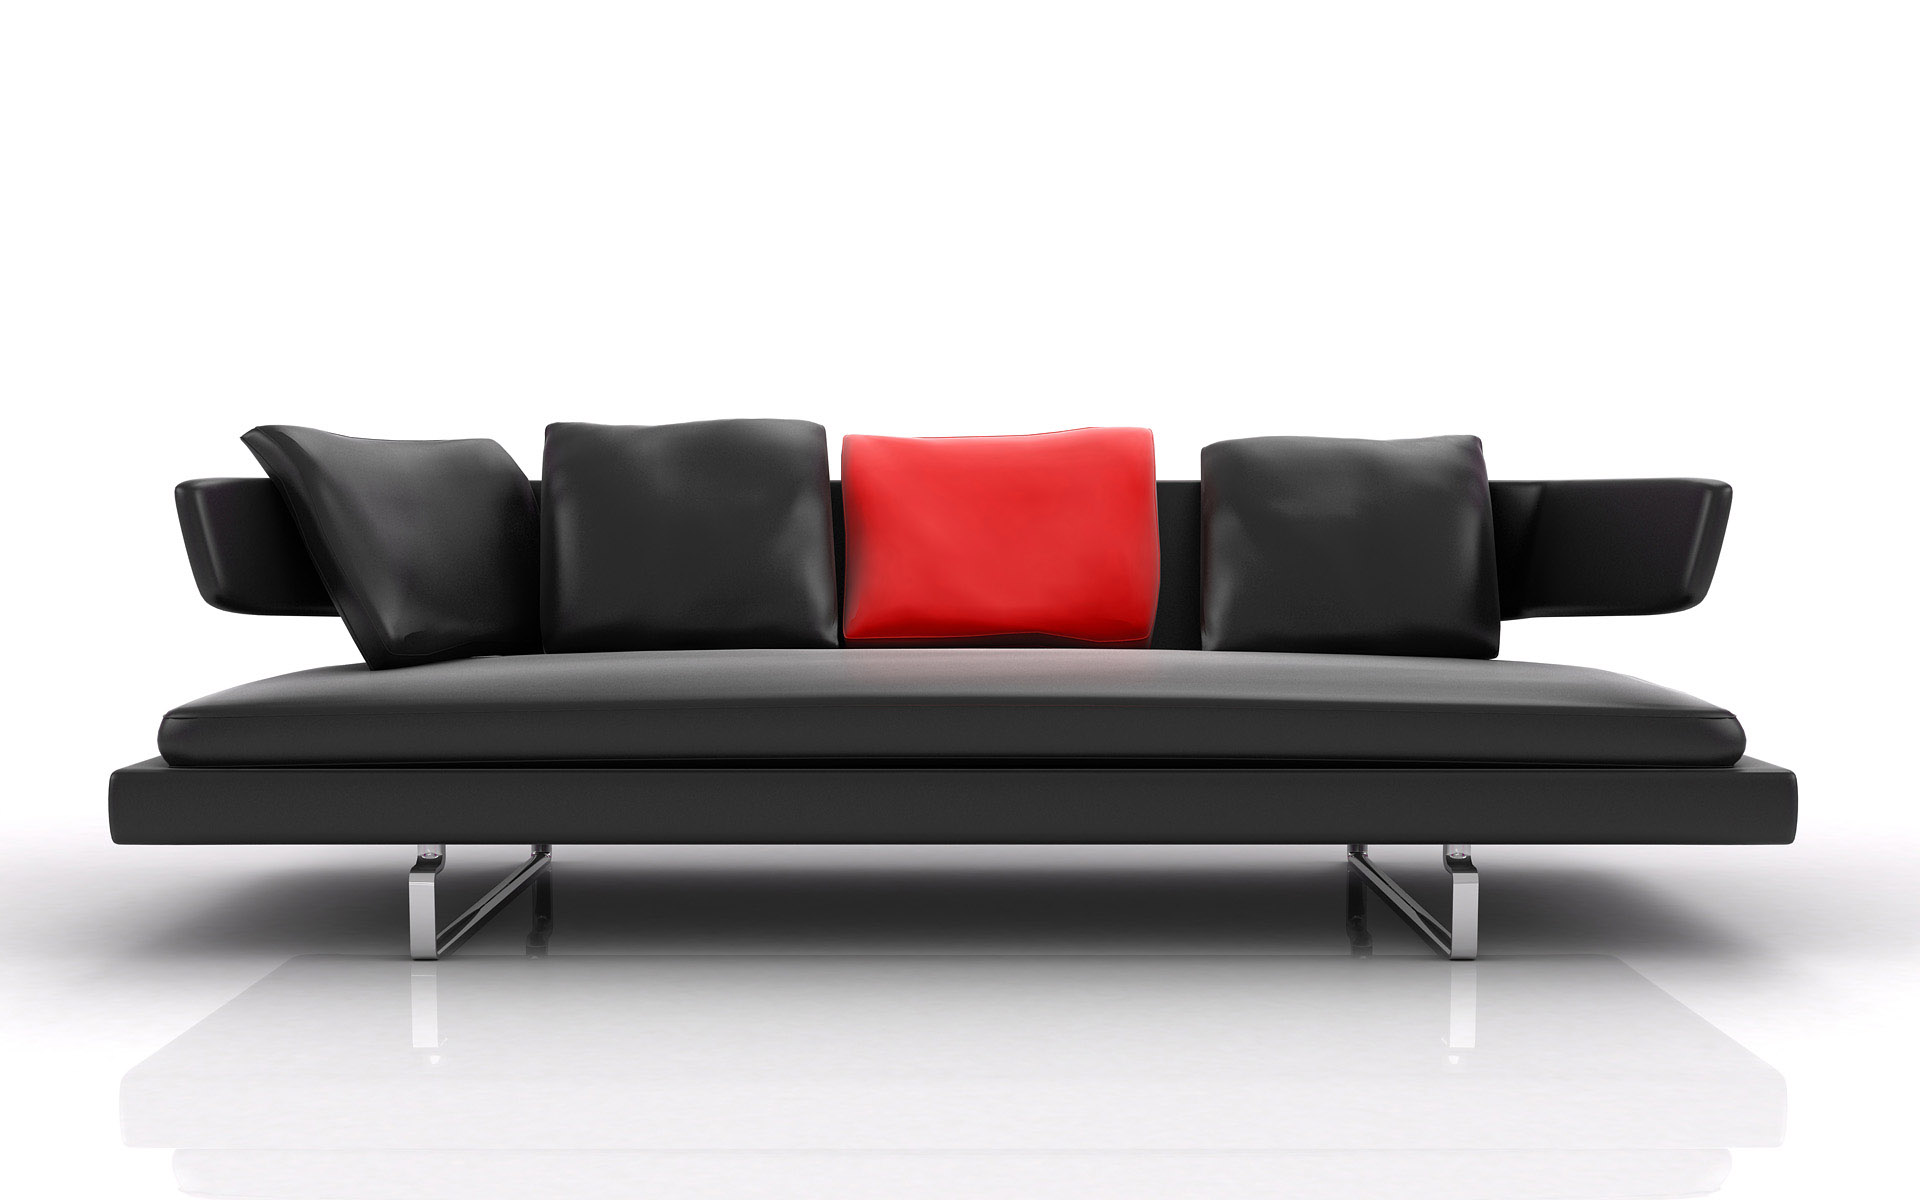 couch, furniture - desktop wallpaper